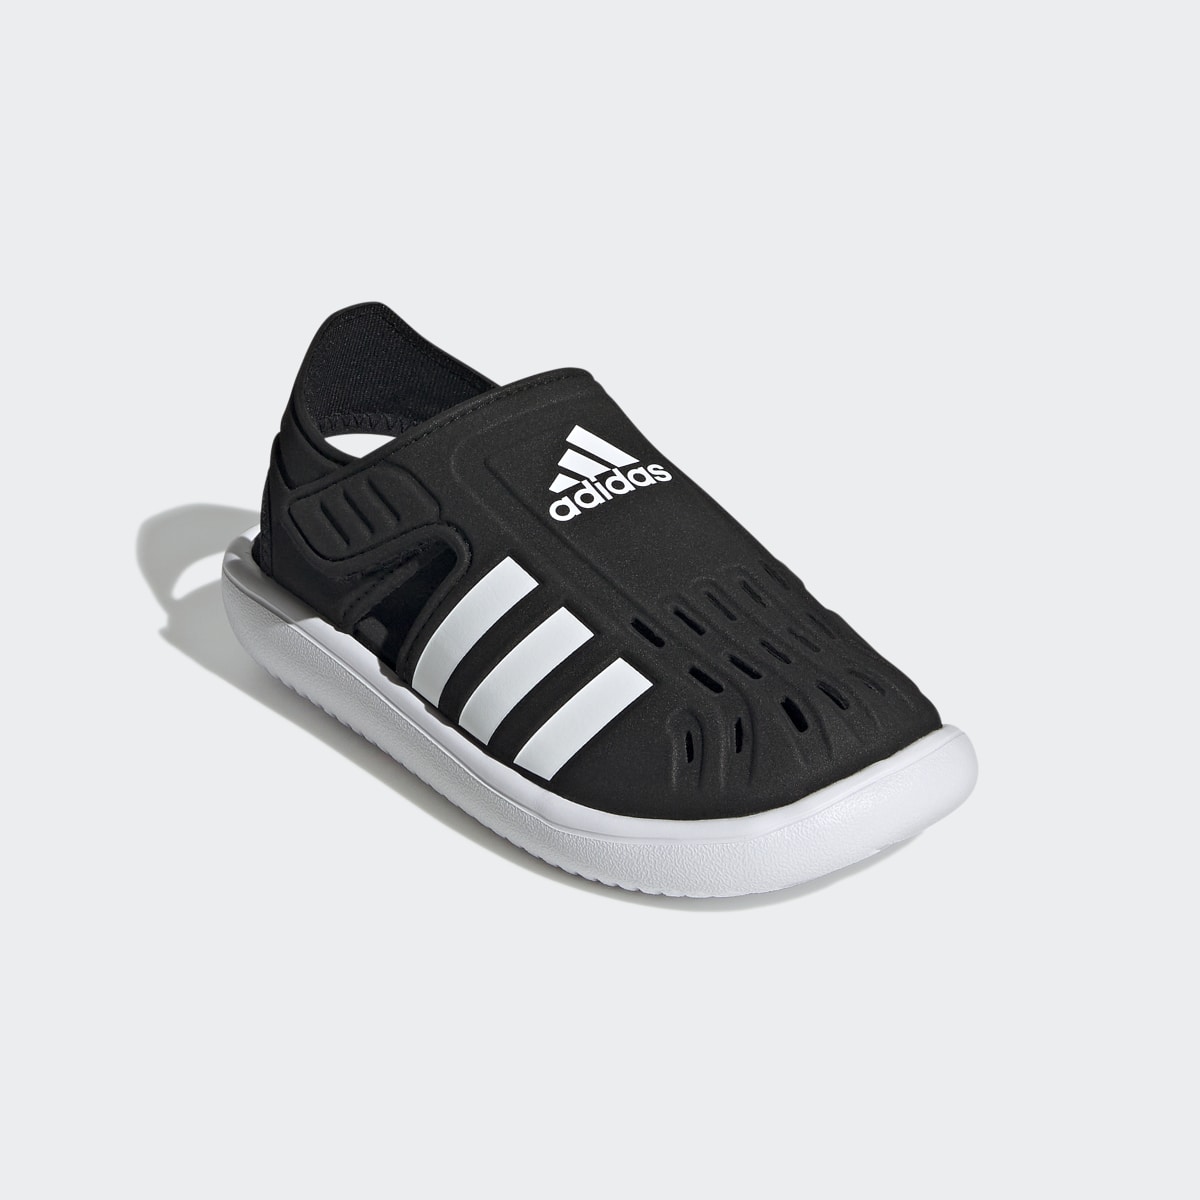 Adidas Summer Closed Toe Water Sandals. 5